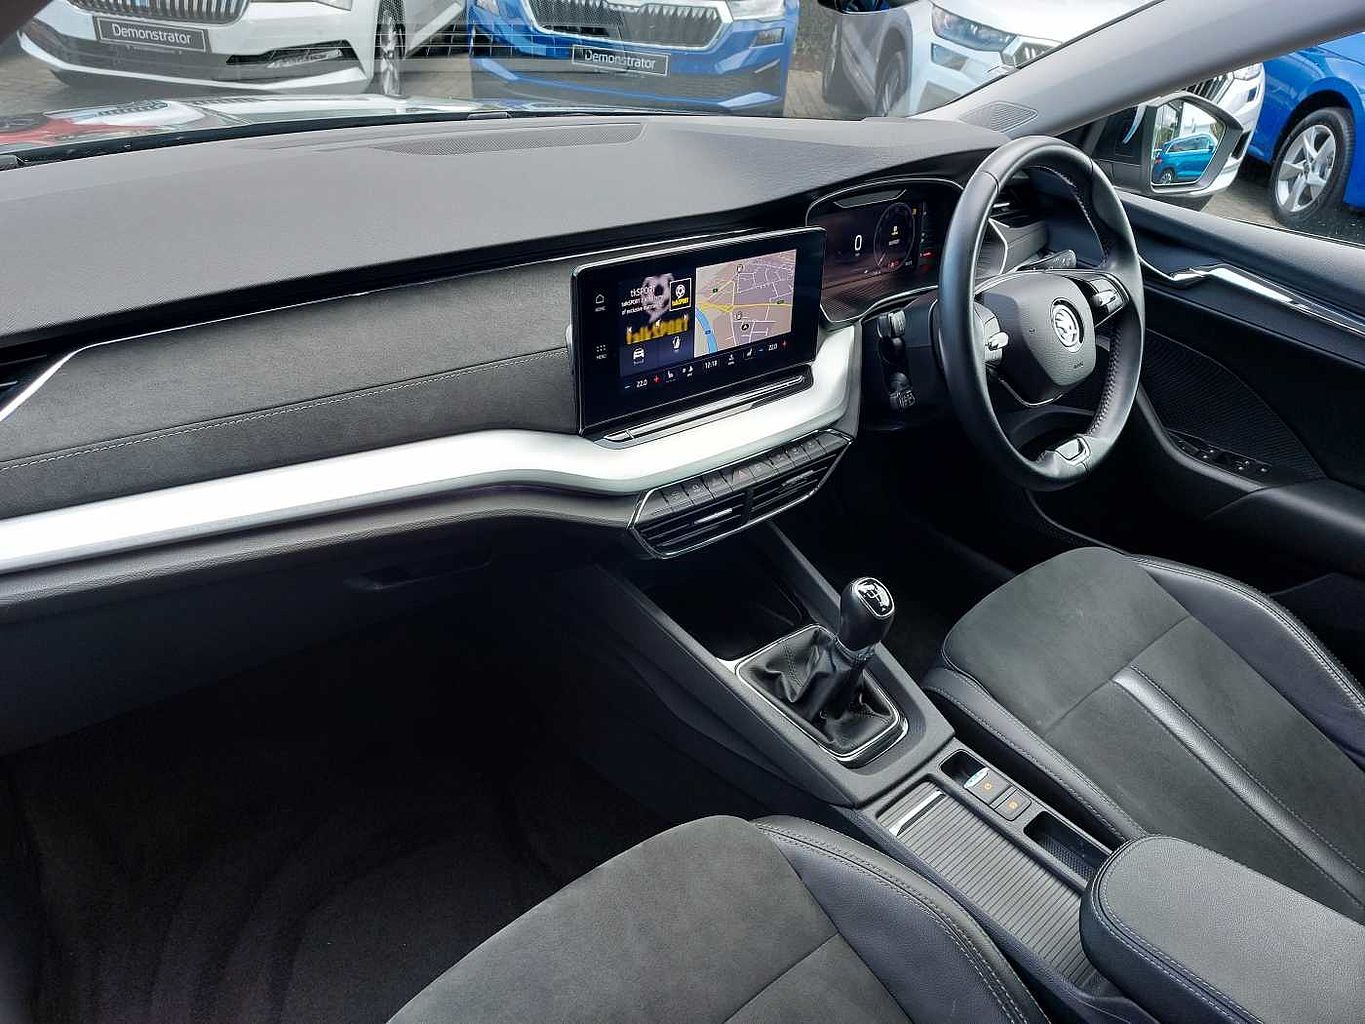 SKODA Octavia 1.5 TSI (150ps) SE L First Edition Hatchback